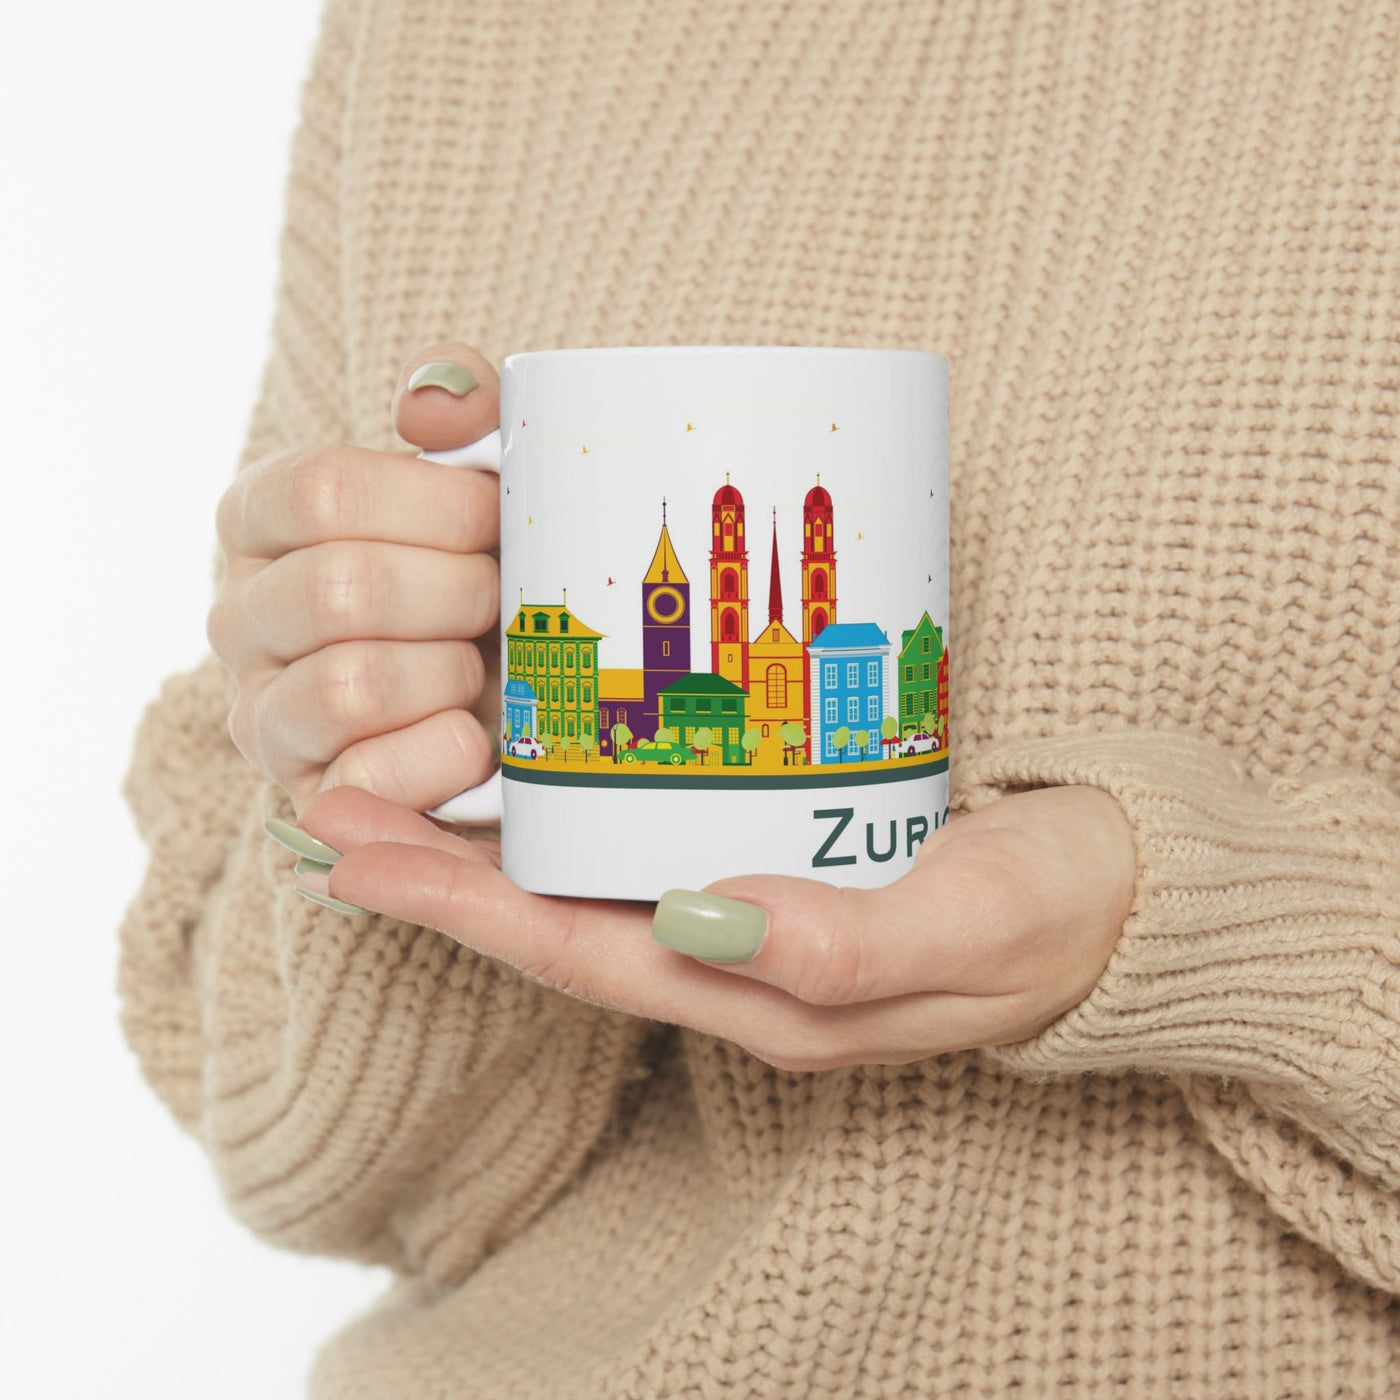 Zurich Switzerland Coffee Mug - Ezra's Clothing